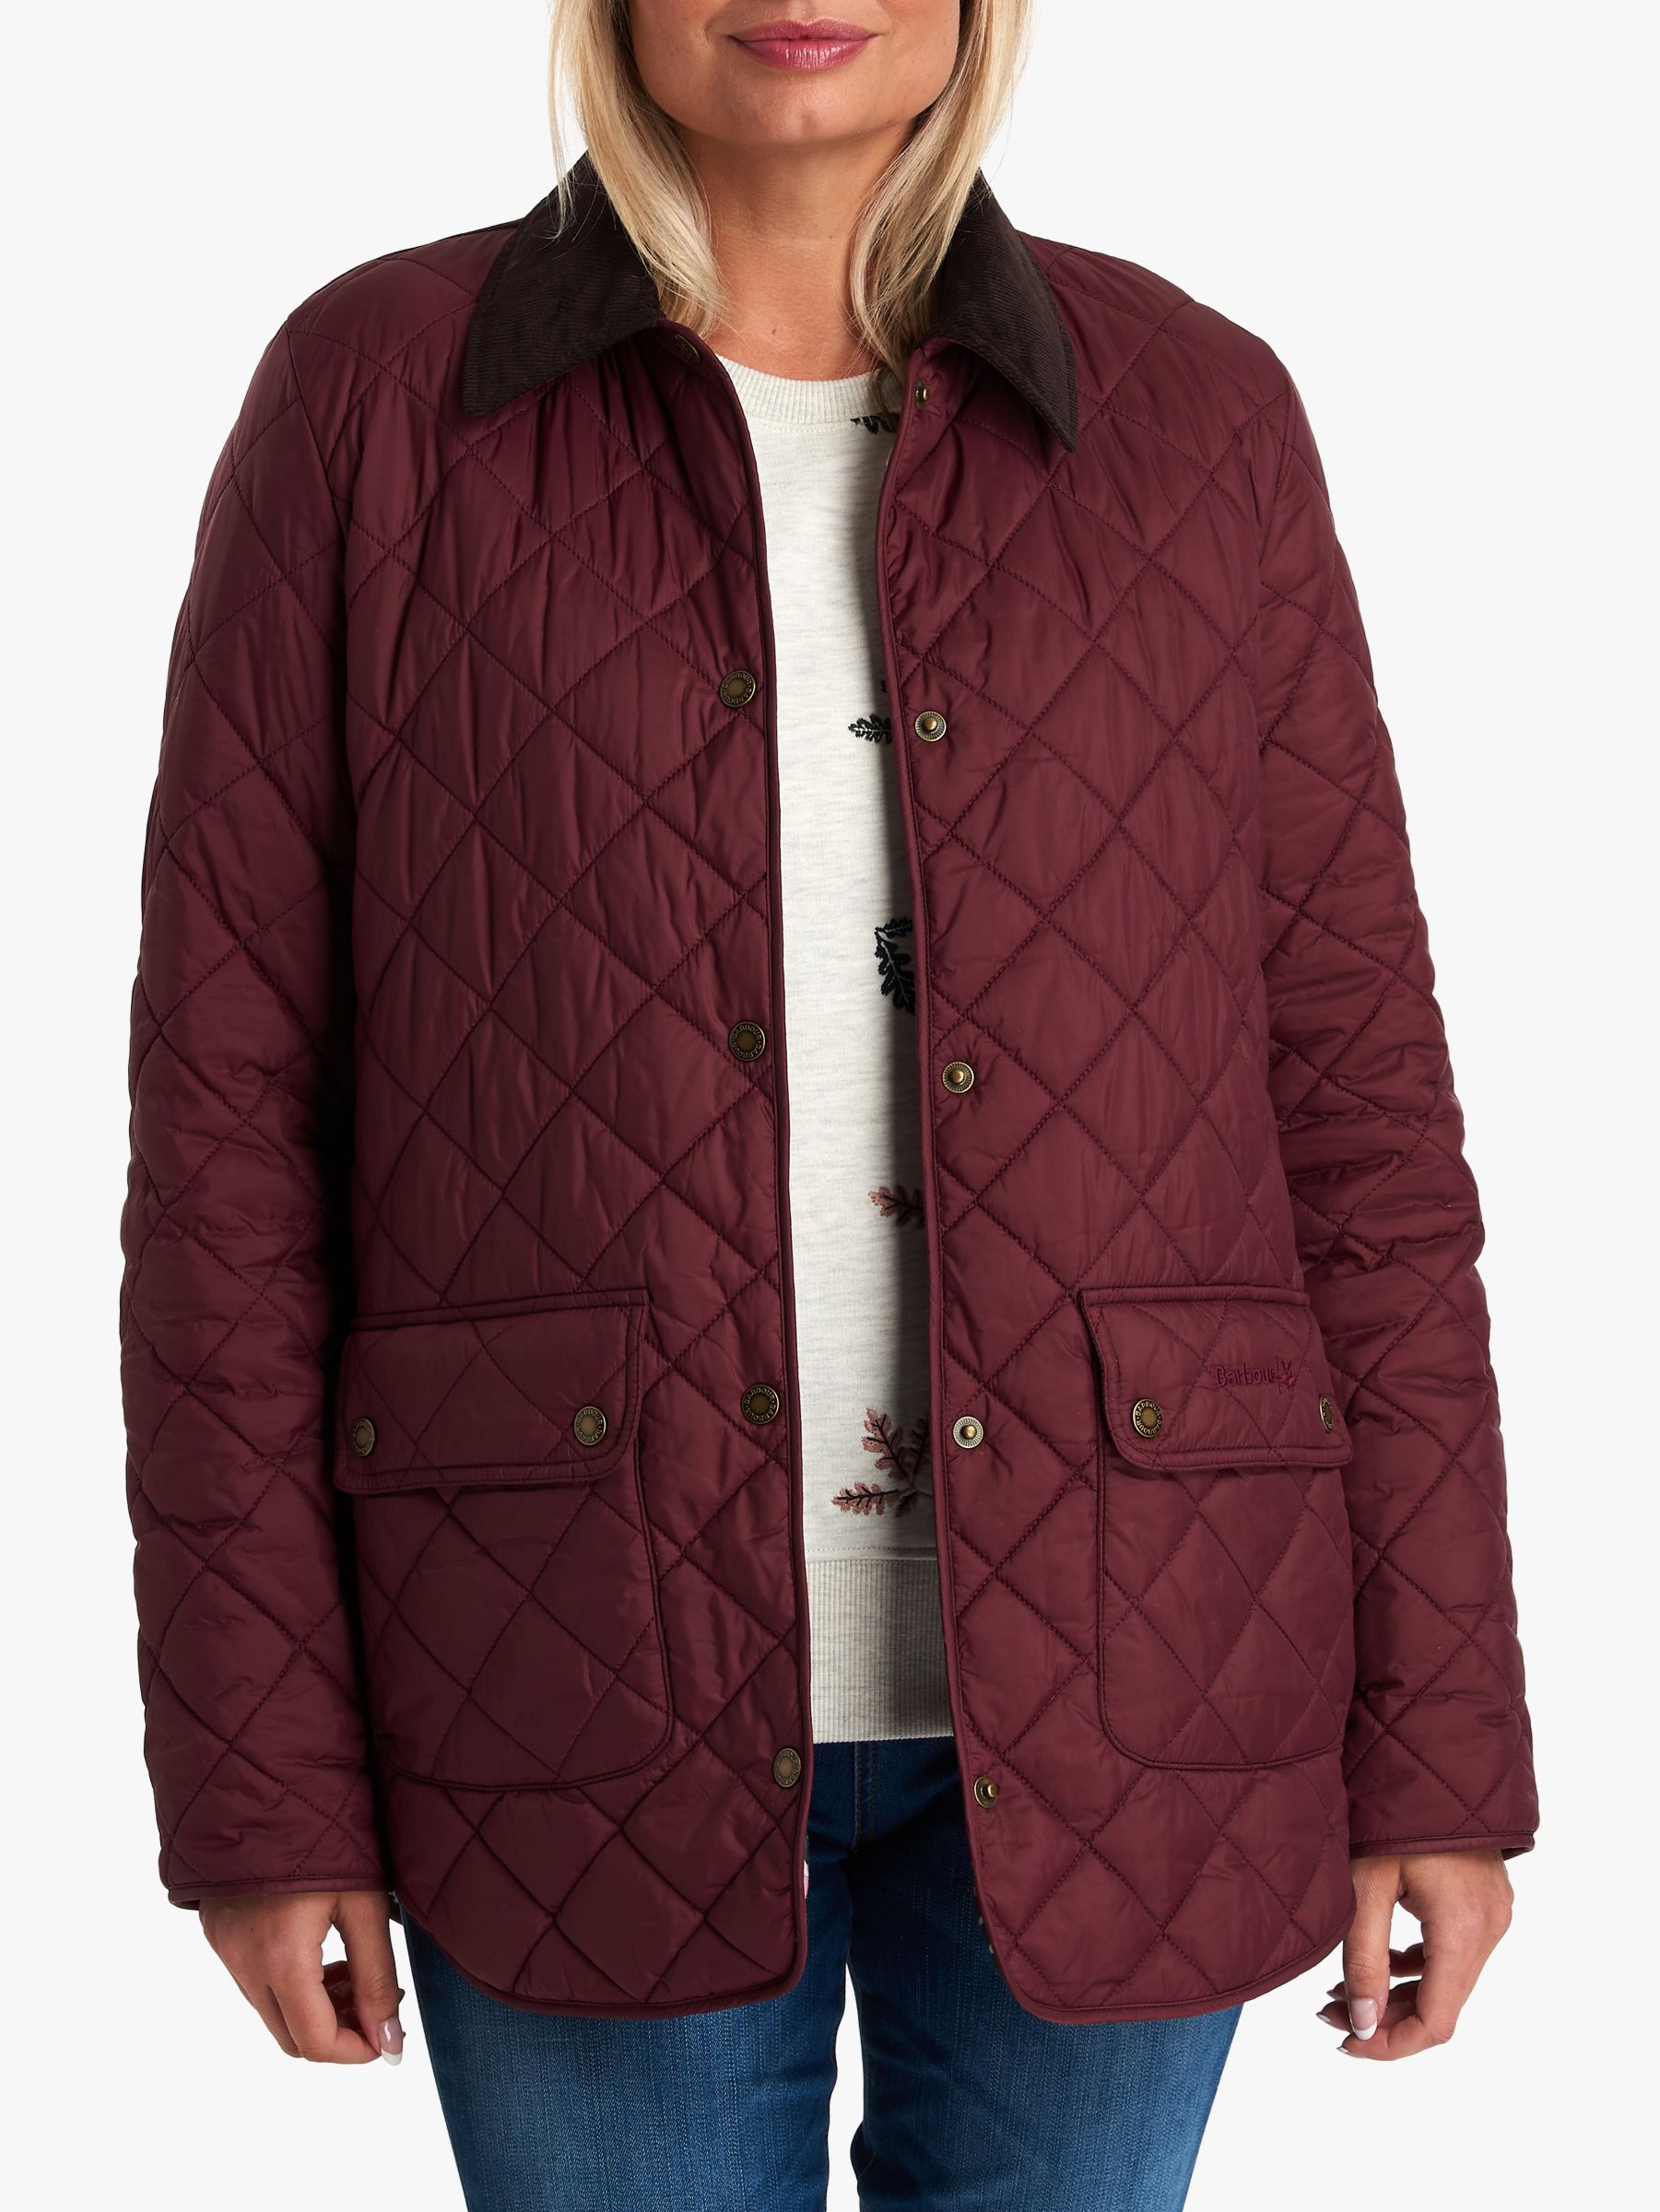 barbour burgundy coat